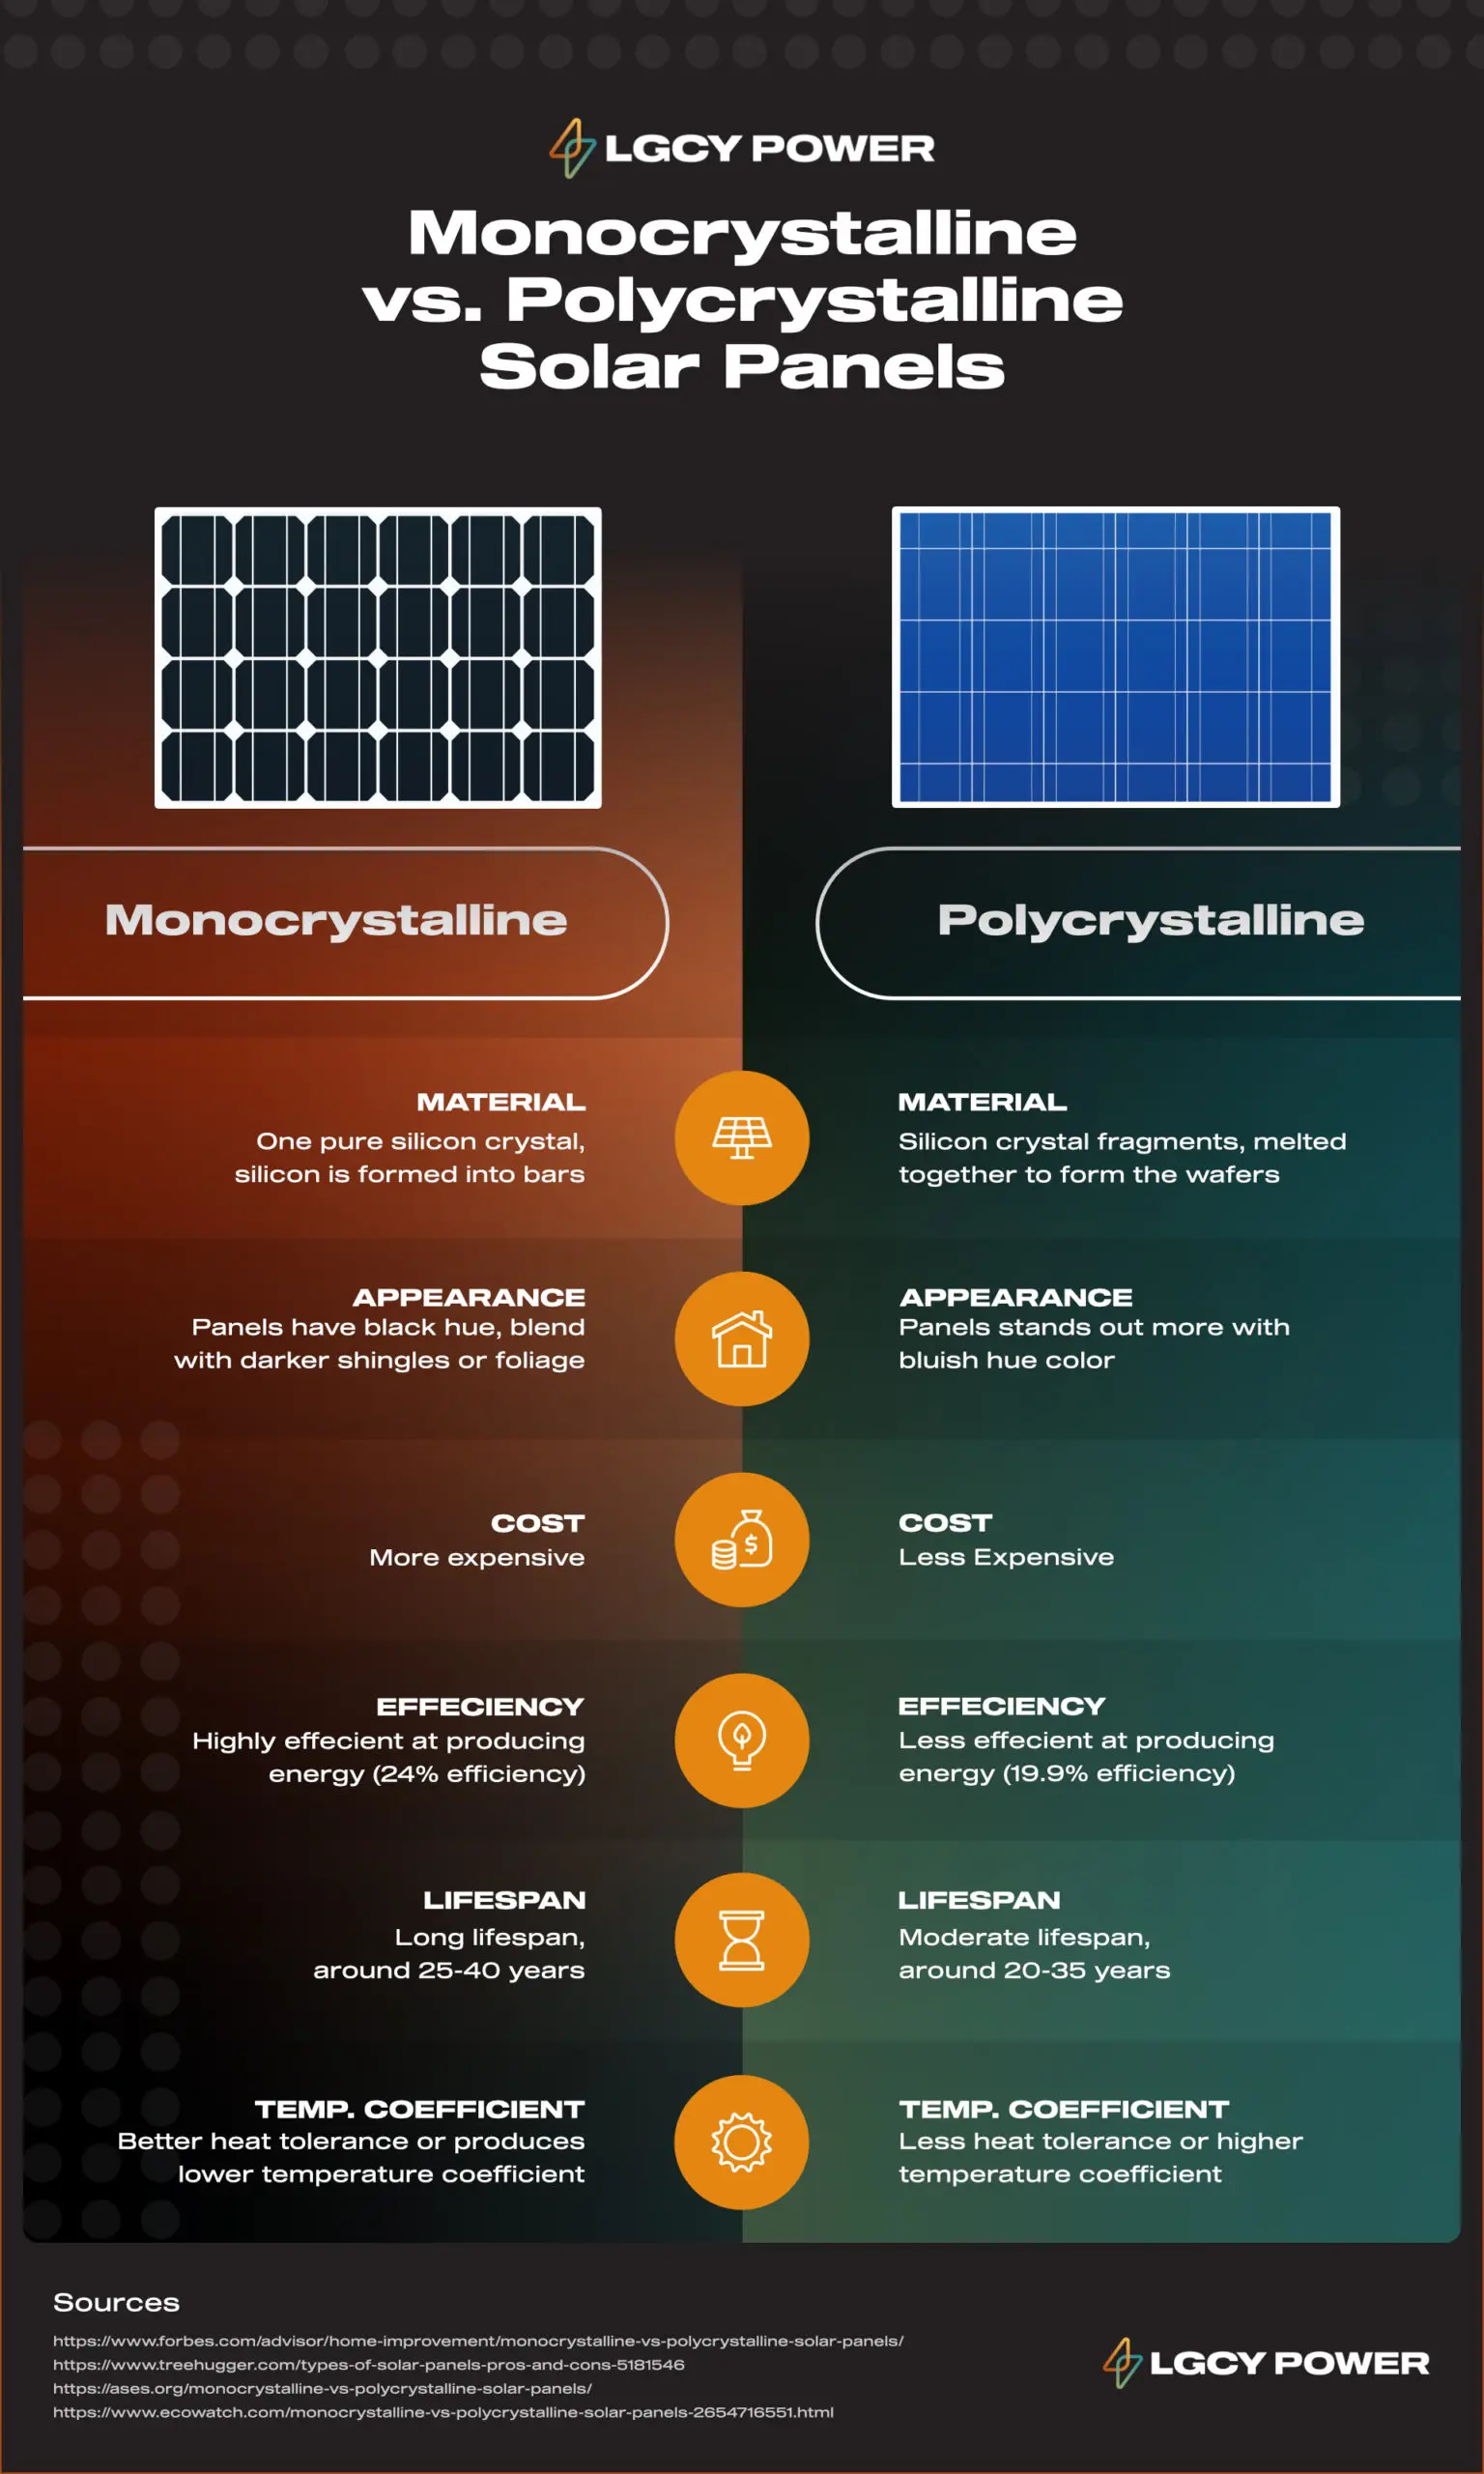 advantages of polycrystalline solar panels - What are the advantages of polycrystalline silicon panels